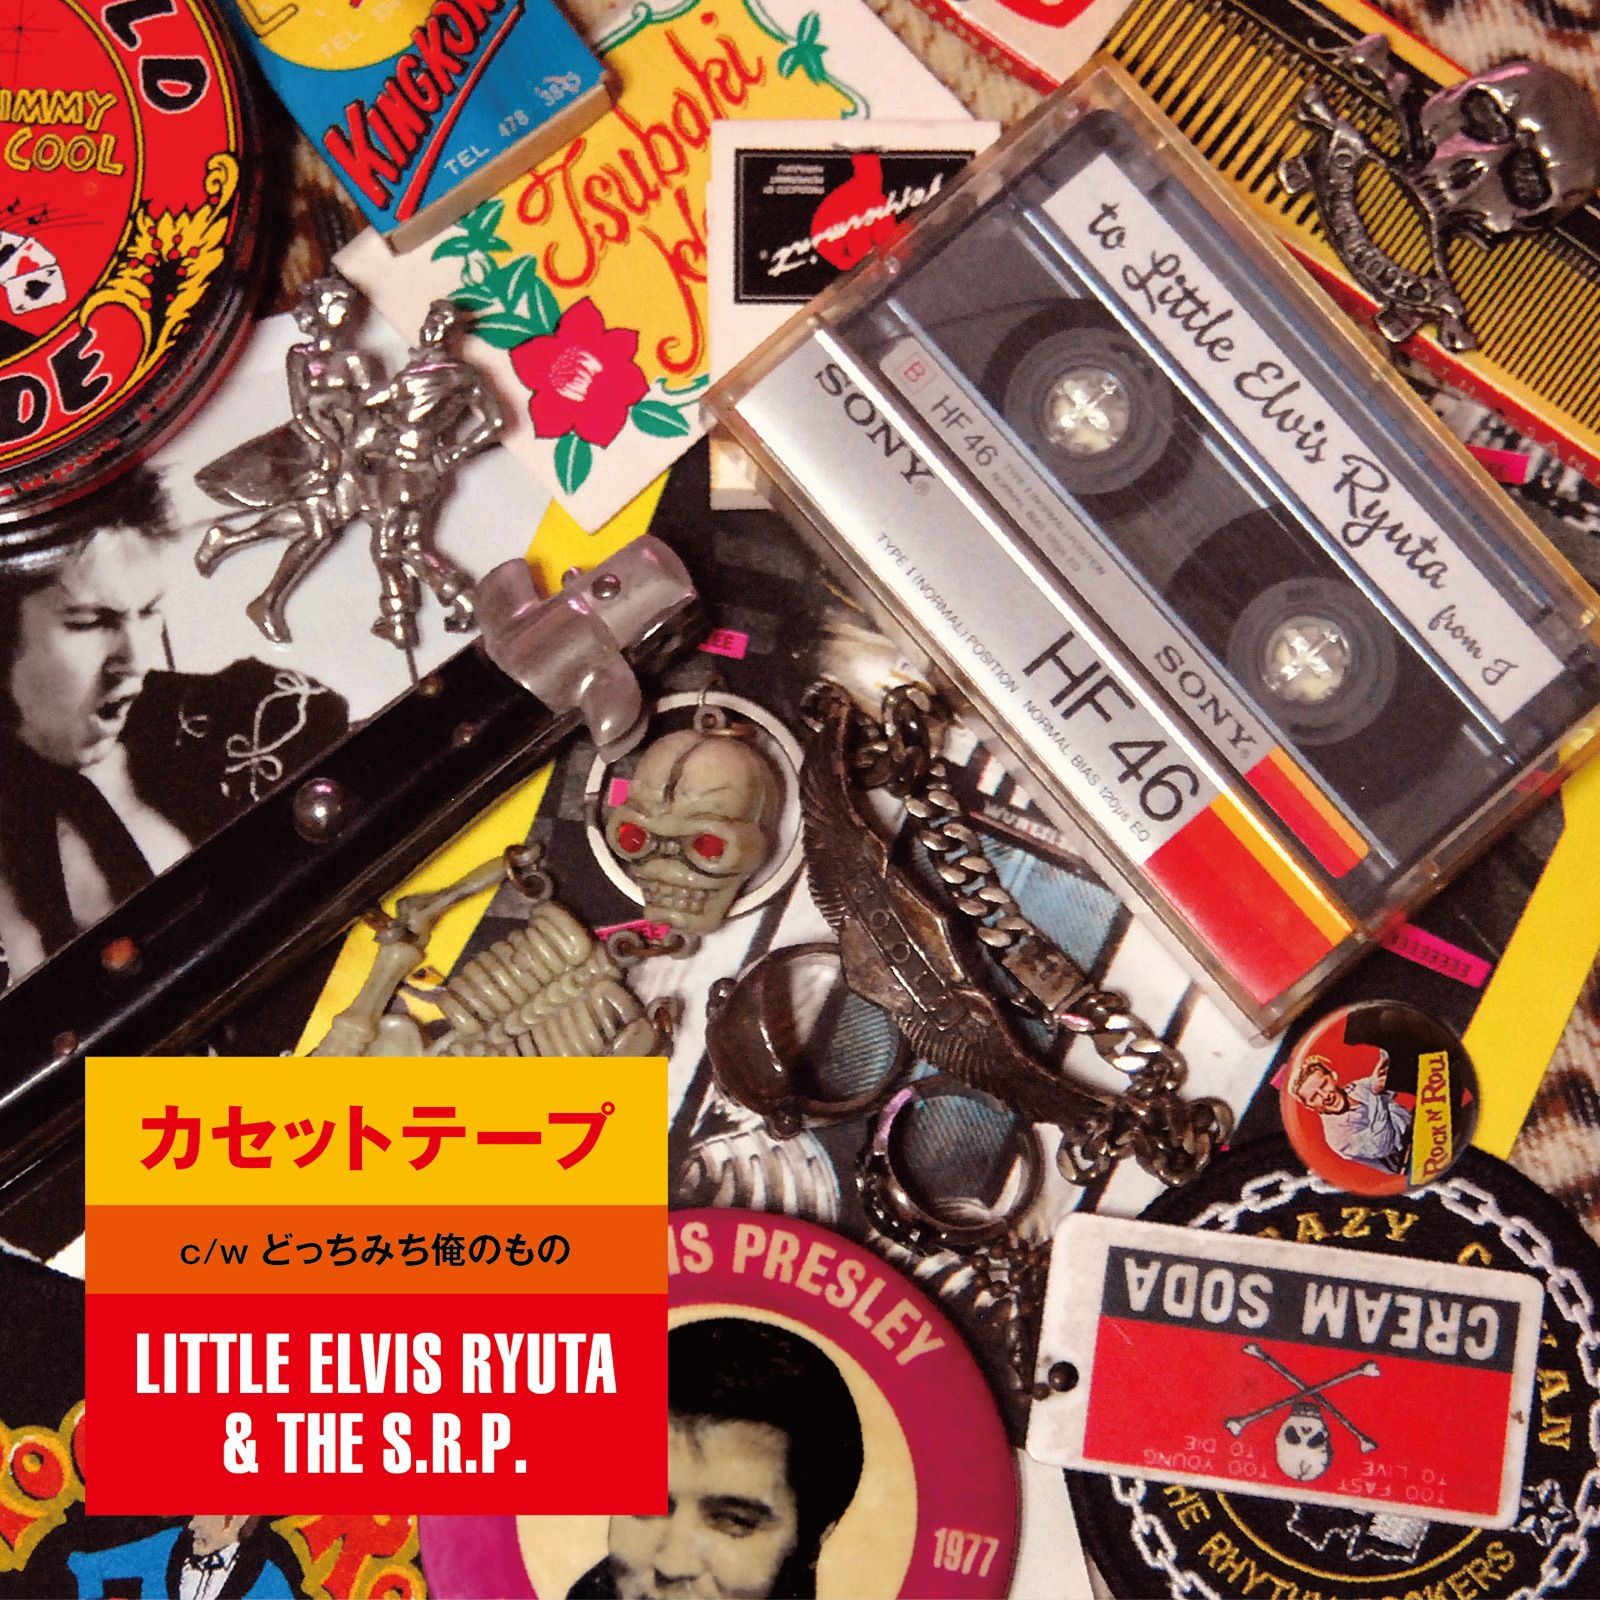 LITTLE ELVIS RYUTA u0026 THE S.R.P. 7インチシングル 「カセットテープ / どっちみち俺のもの」ロカビリー　 rockabilly